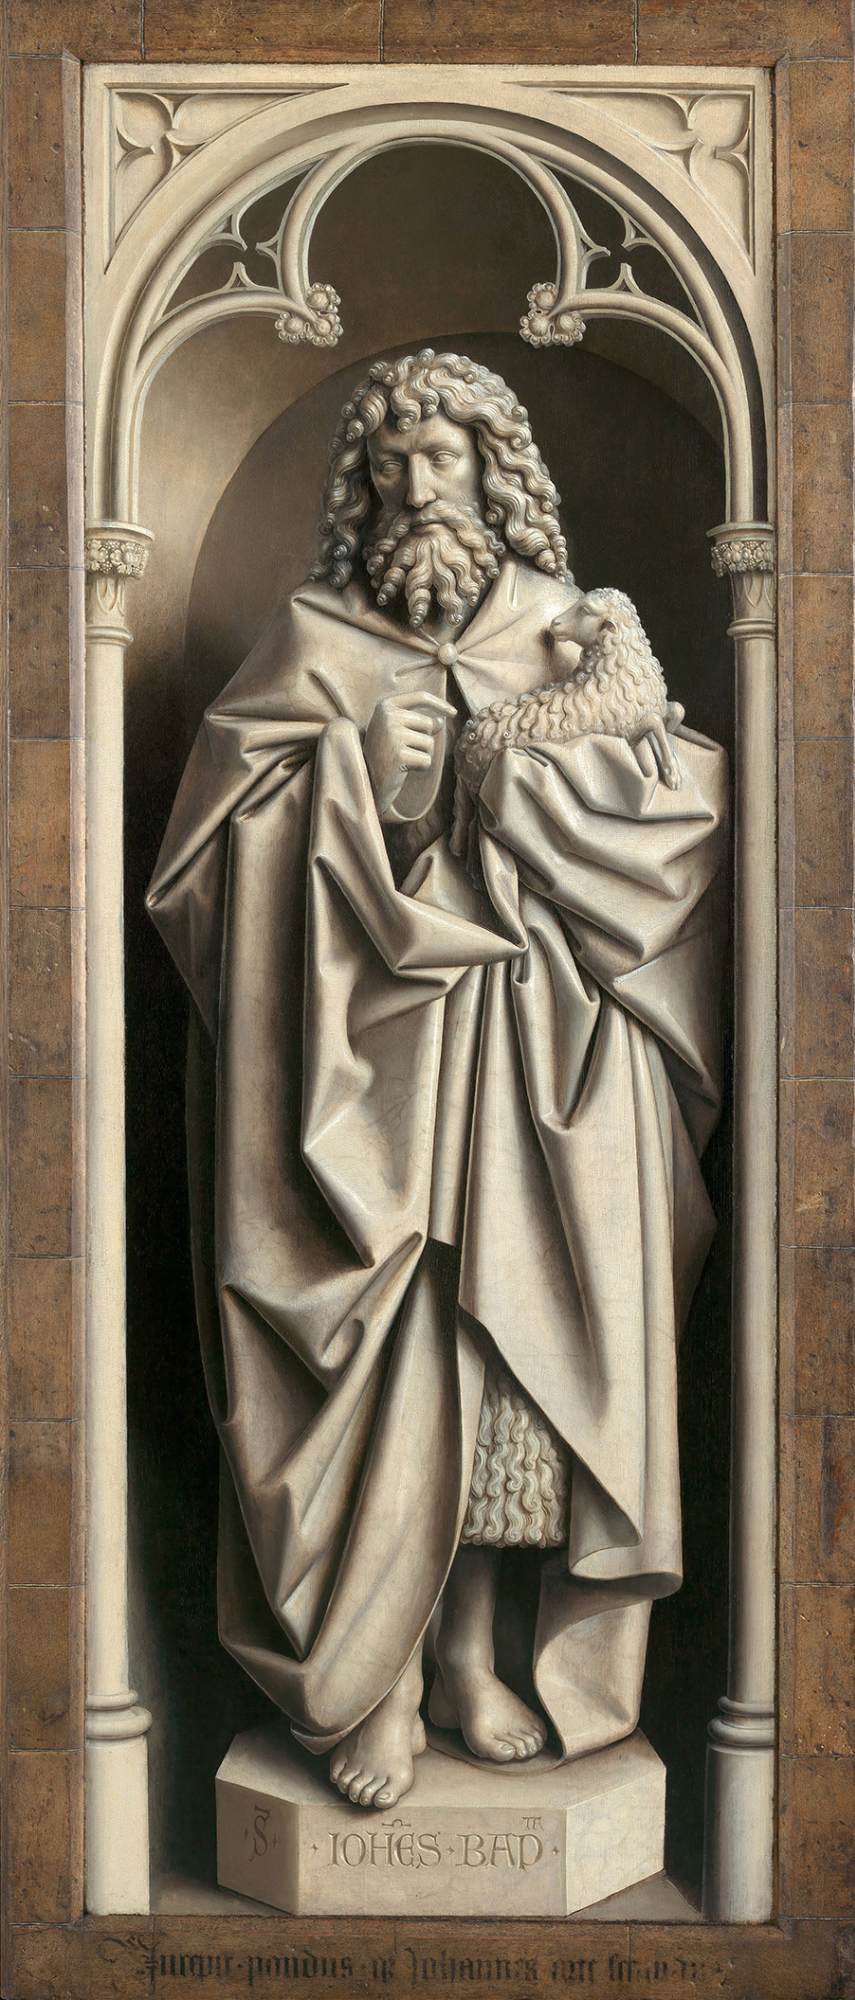 The Ghent Altarpiece: Saint John the Baptist